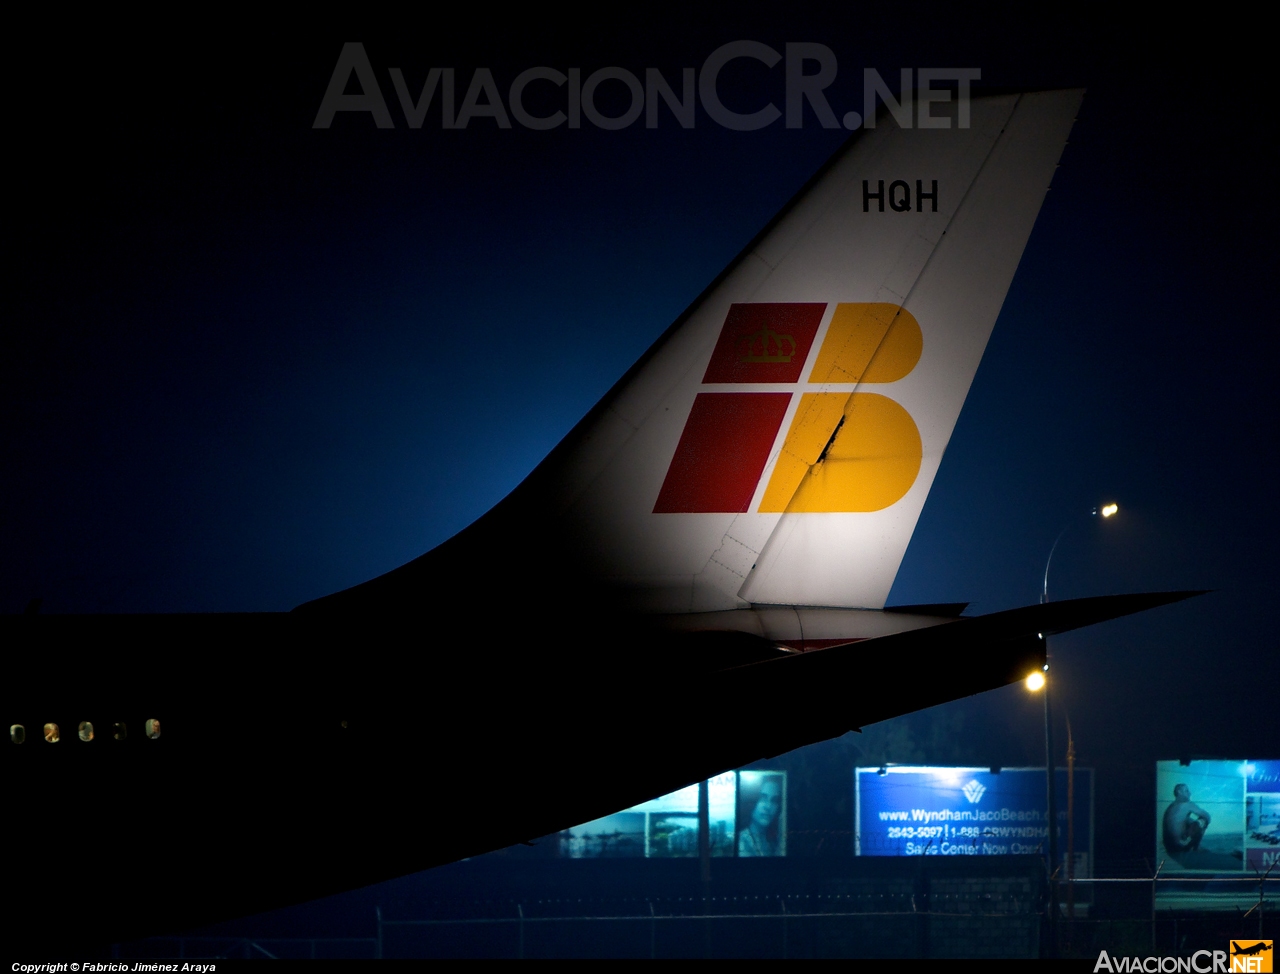 EC-HQH - Airbus A340-313X - Iberia